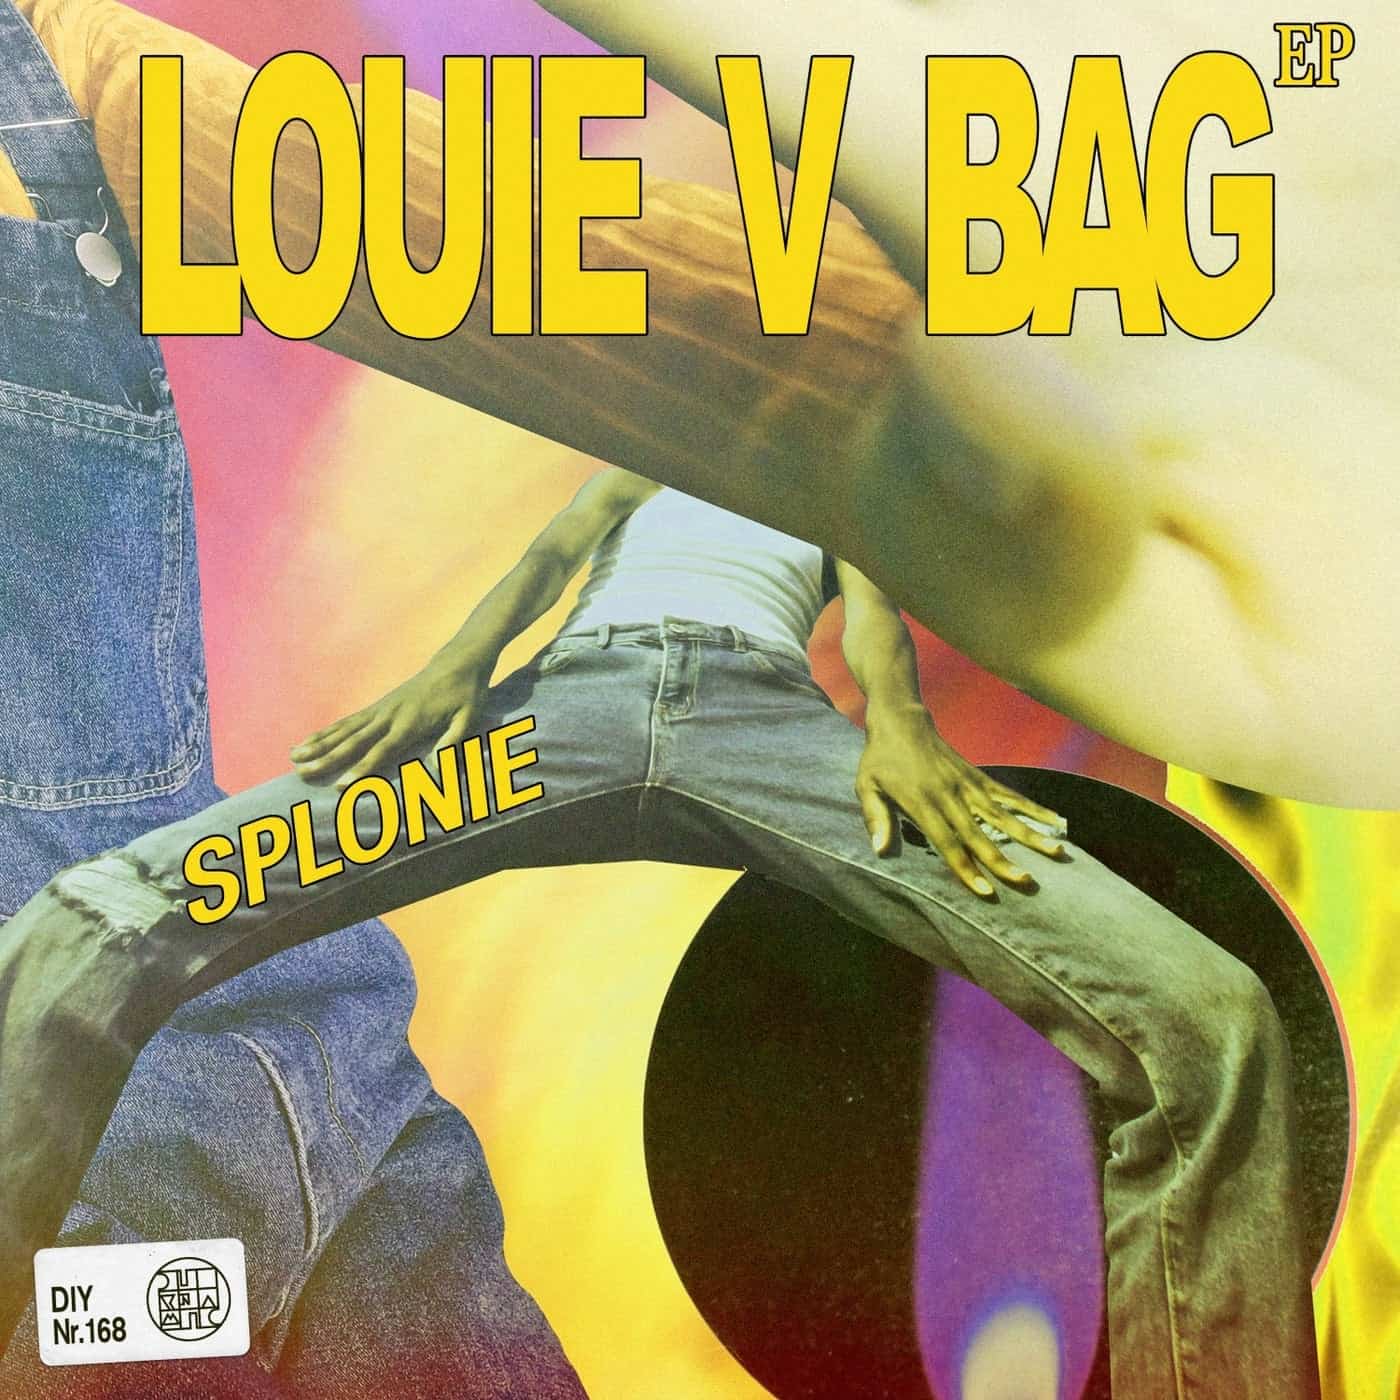 image cover: splonie - Louie V Bag EP / DIYNAMIC168